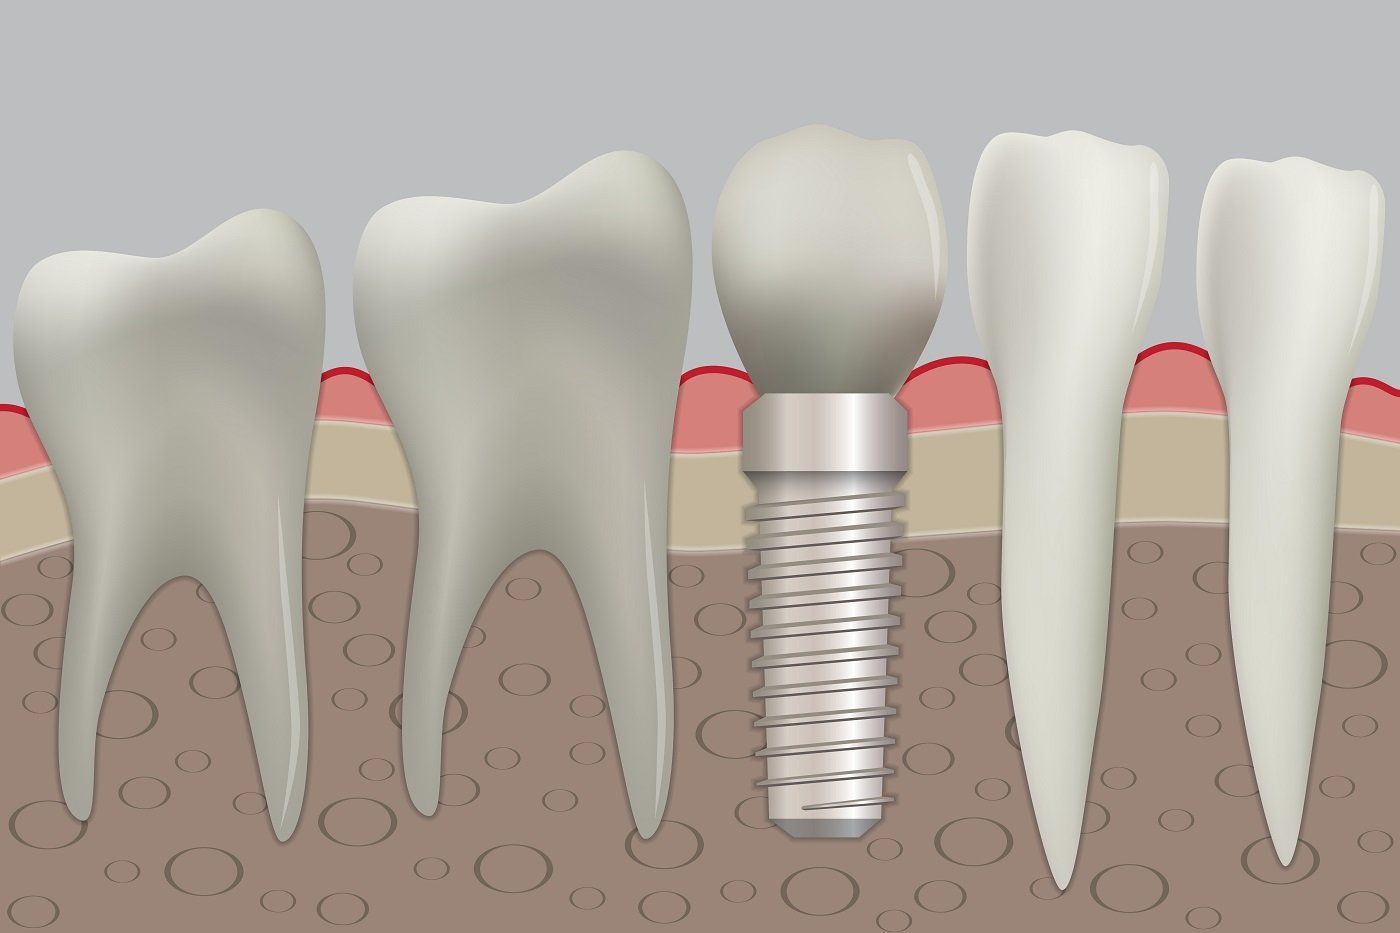 The dental implant process